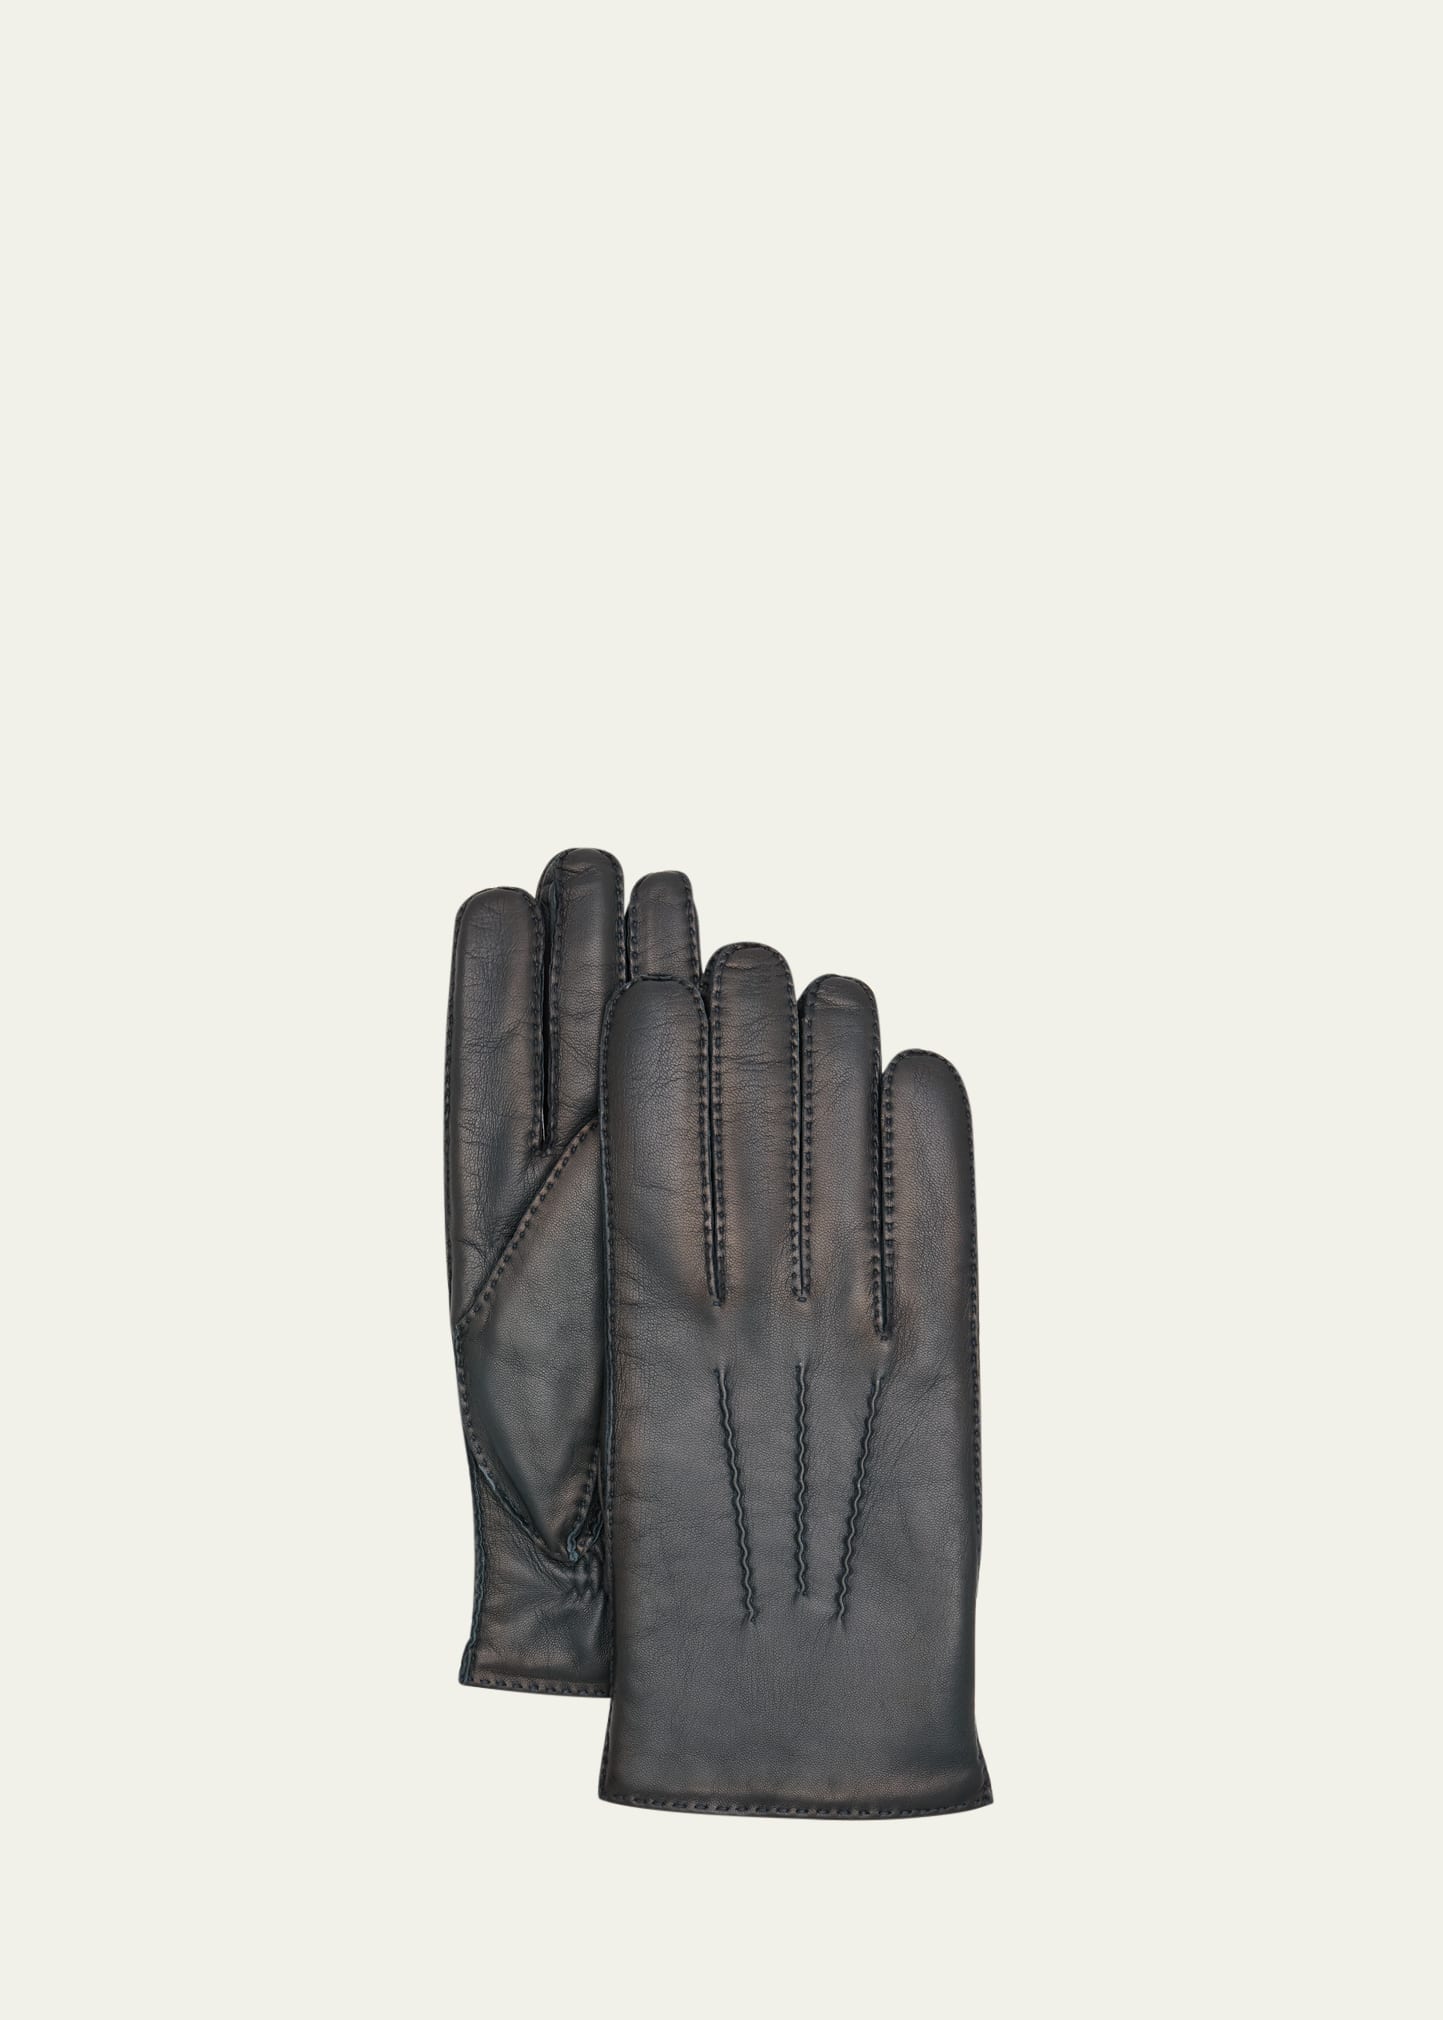 Agnelle Men's Patina Leather Gloves In Blue